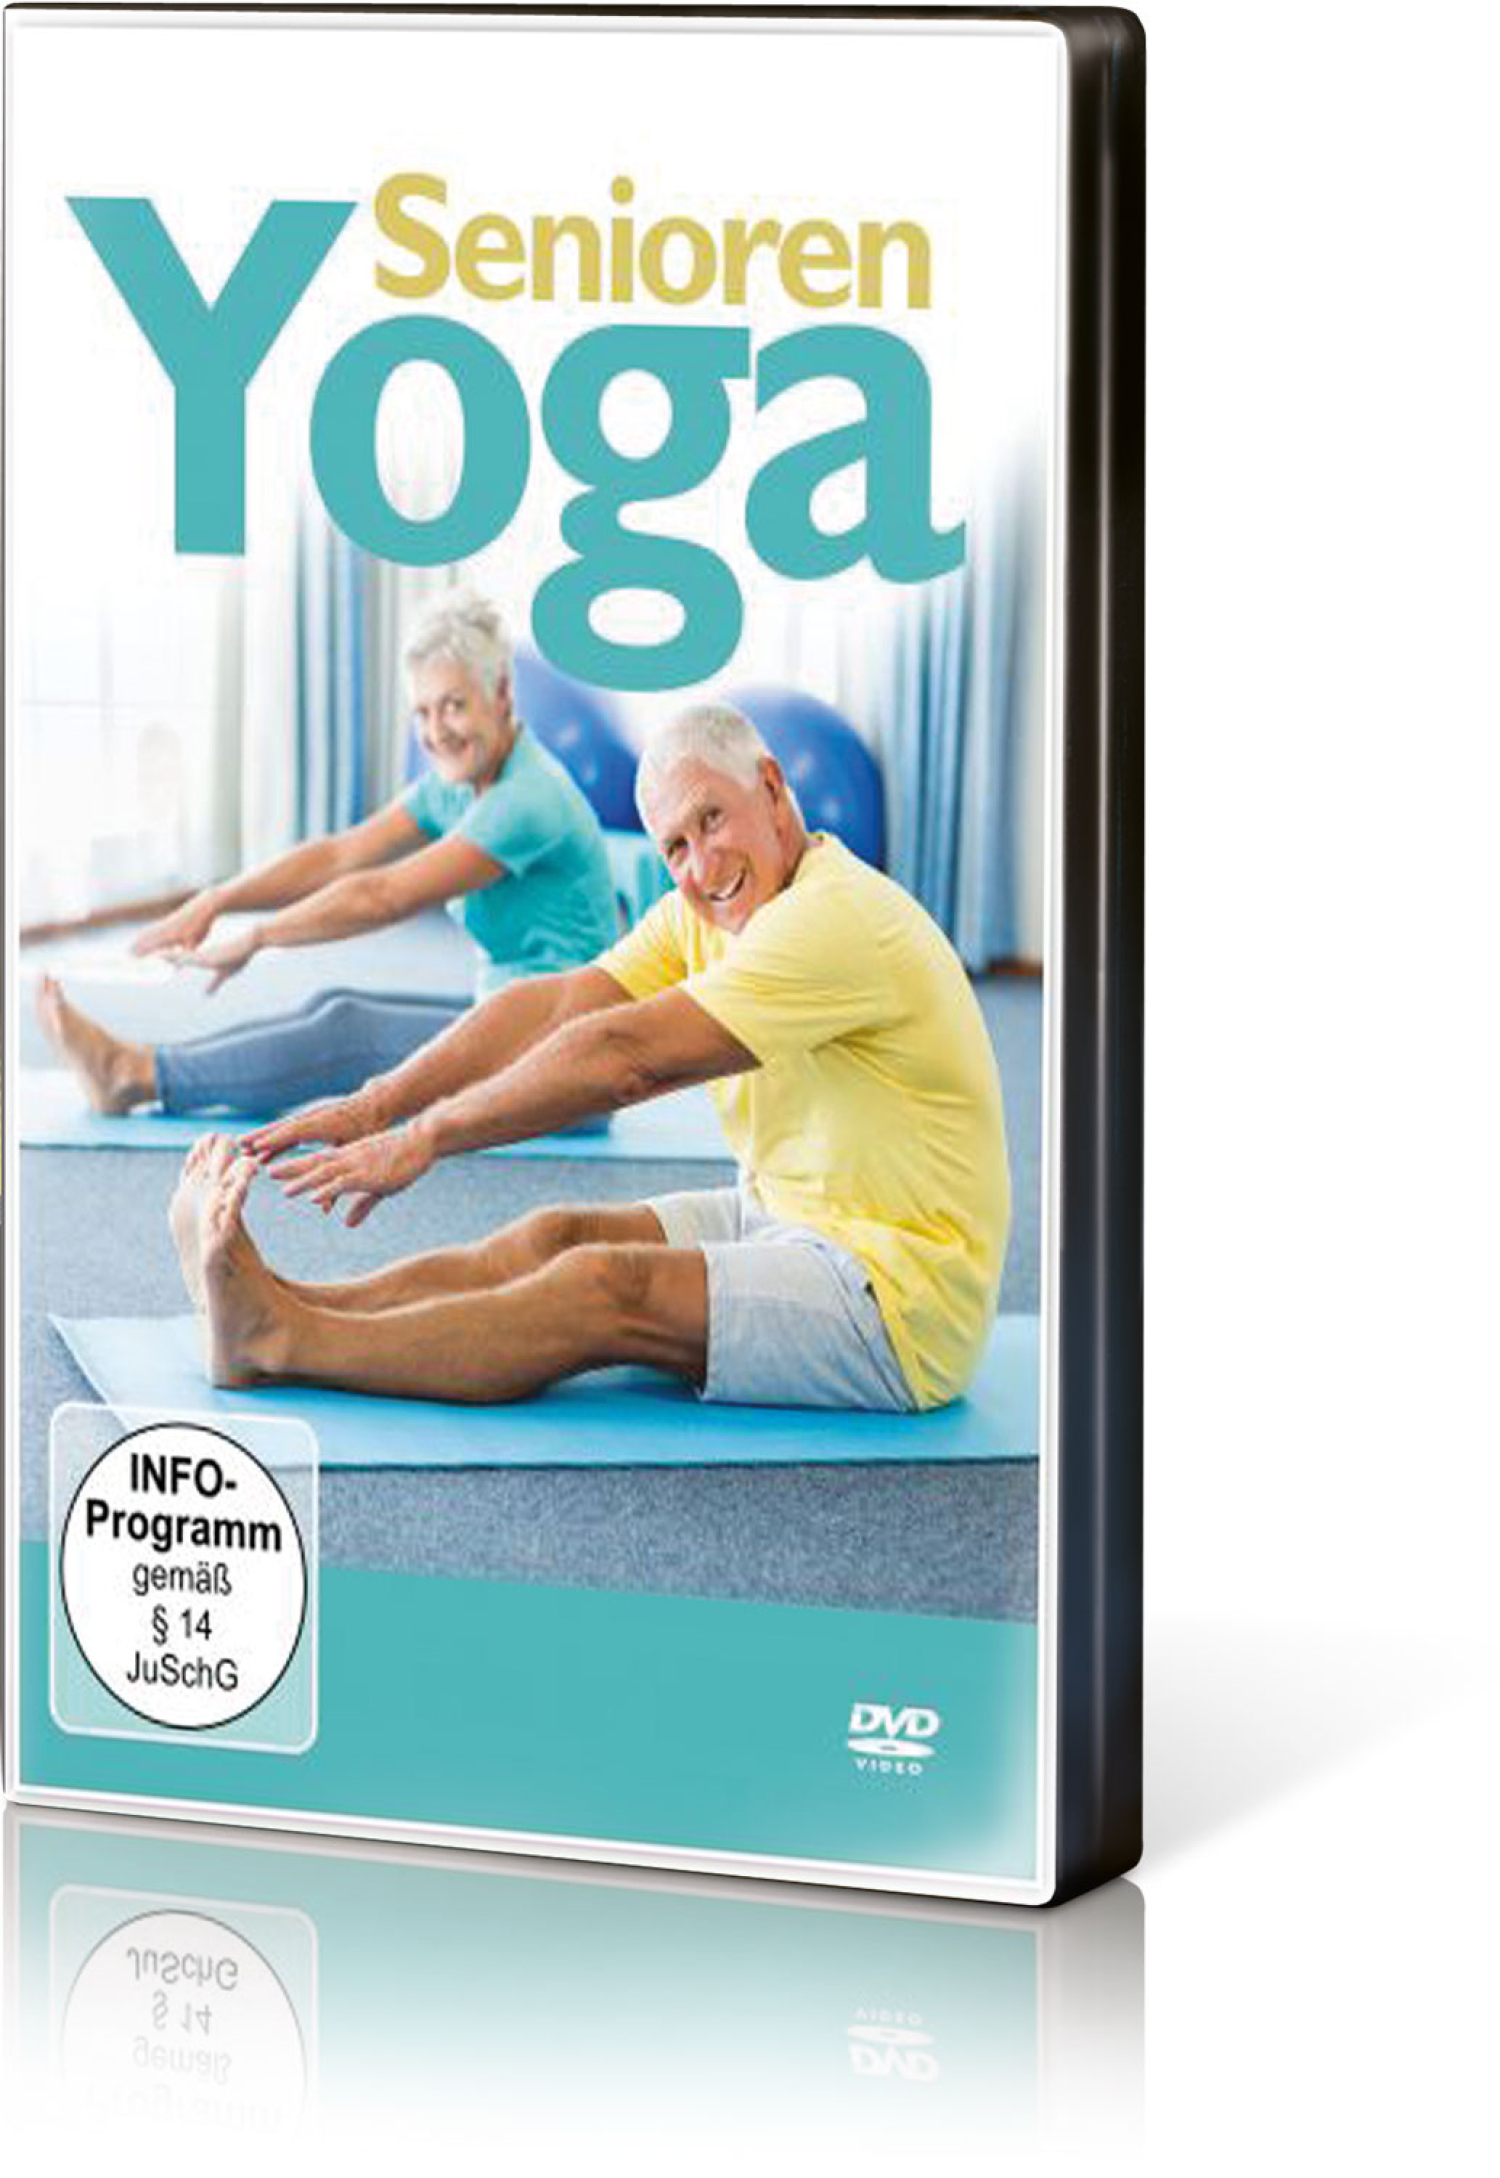 Senioren Yoga (DVD), Produktbild 1